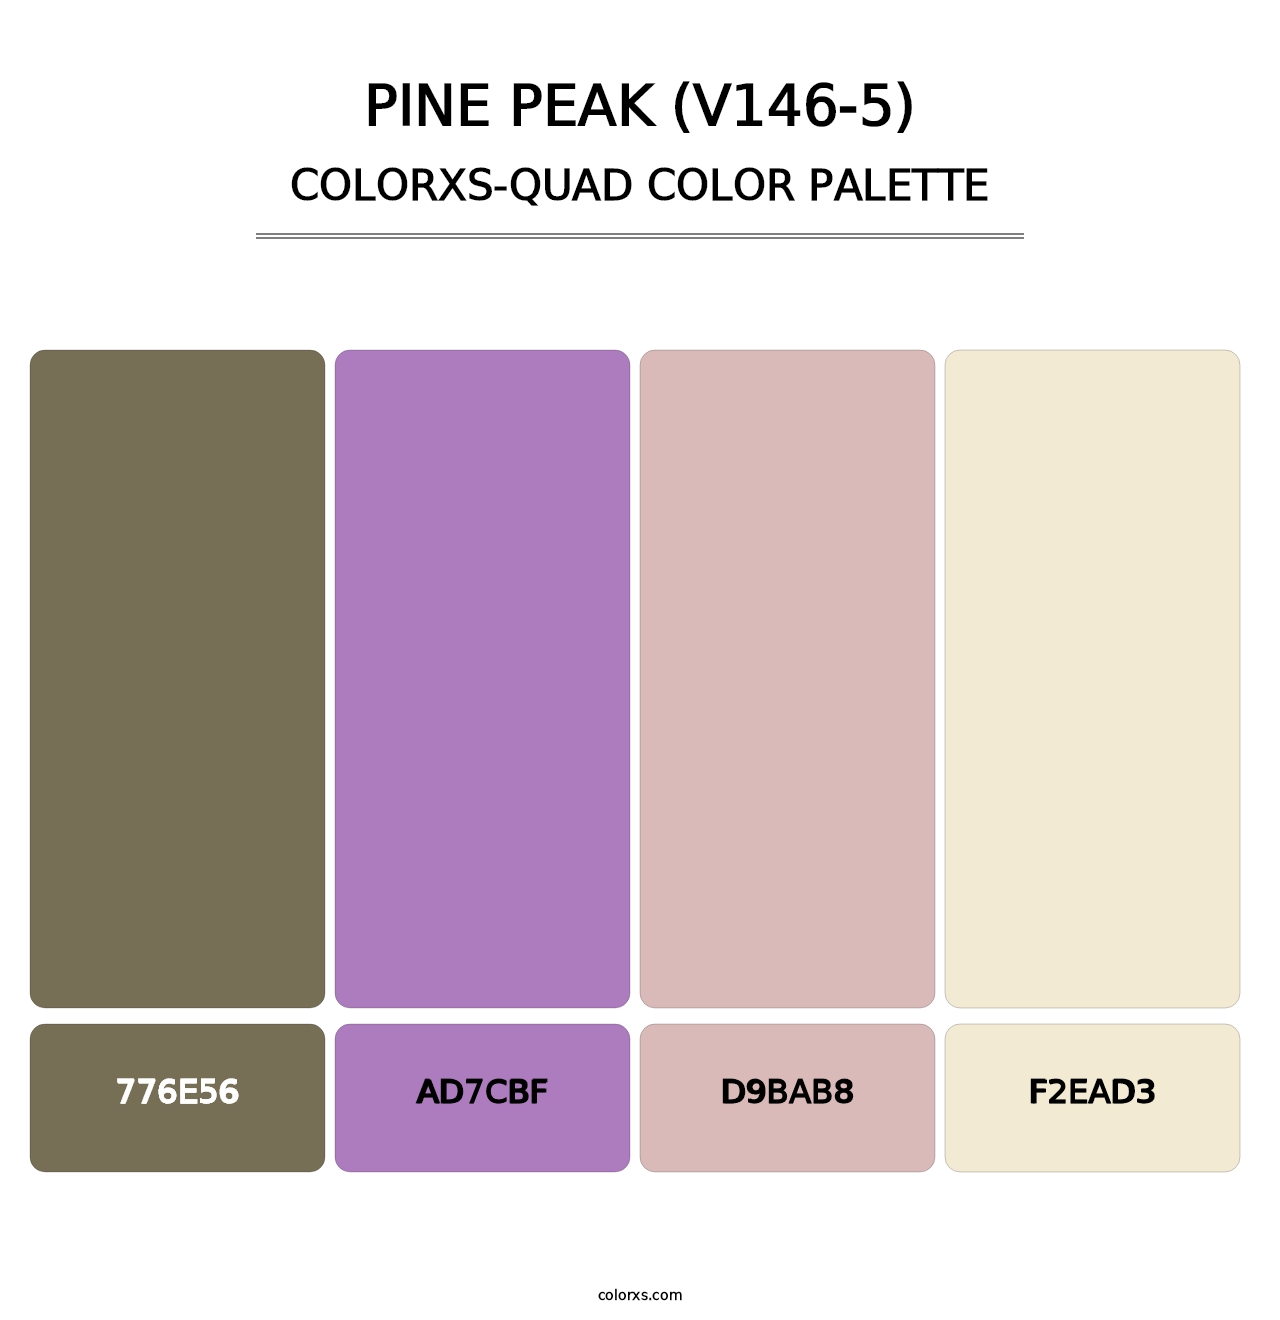 Pine Peak (V146-5) - Colorxs Quad Palette